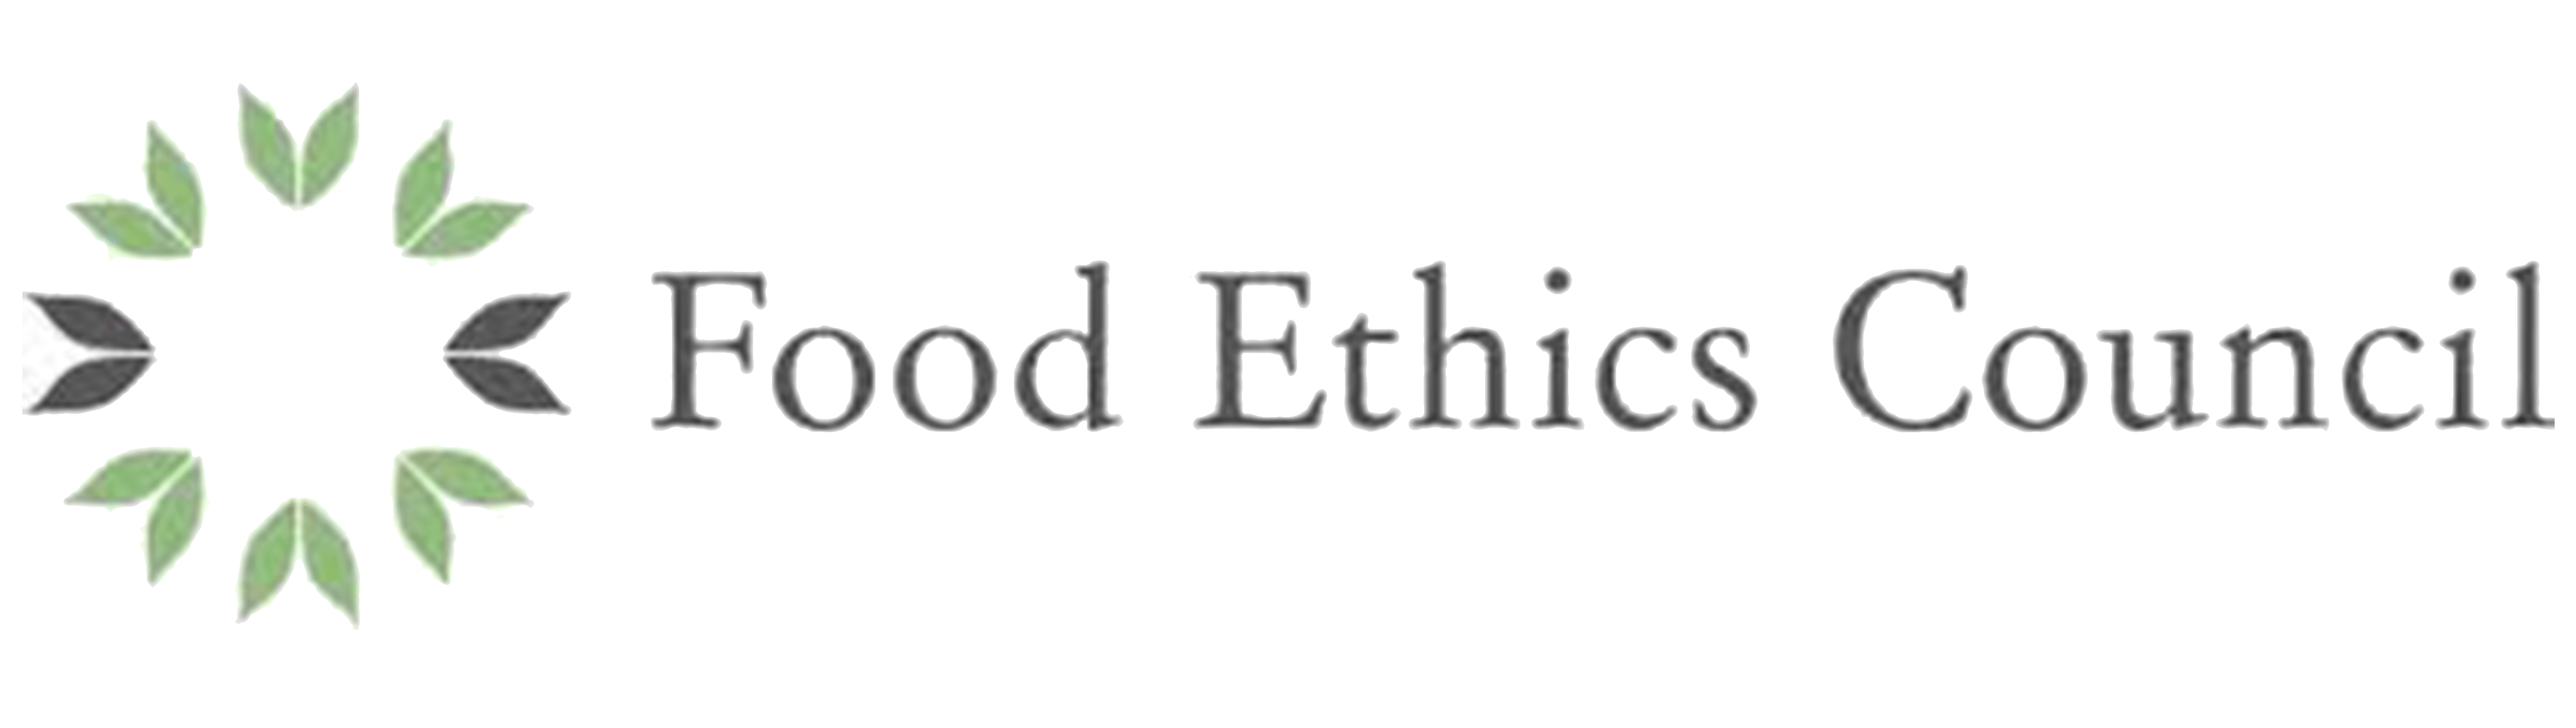 food ethics council logo